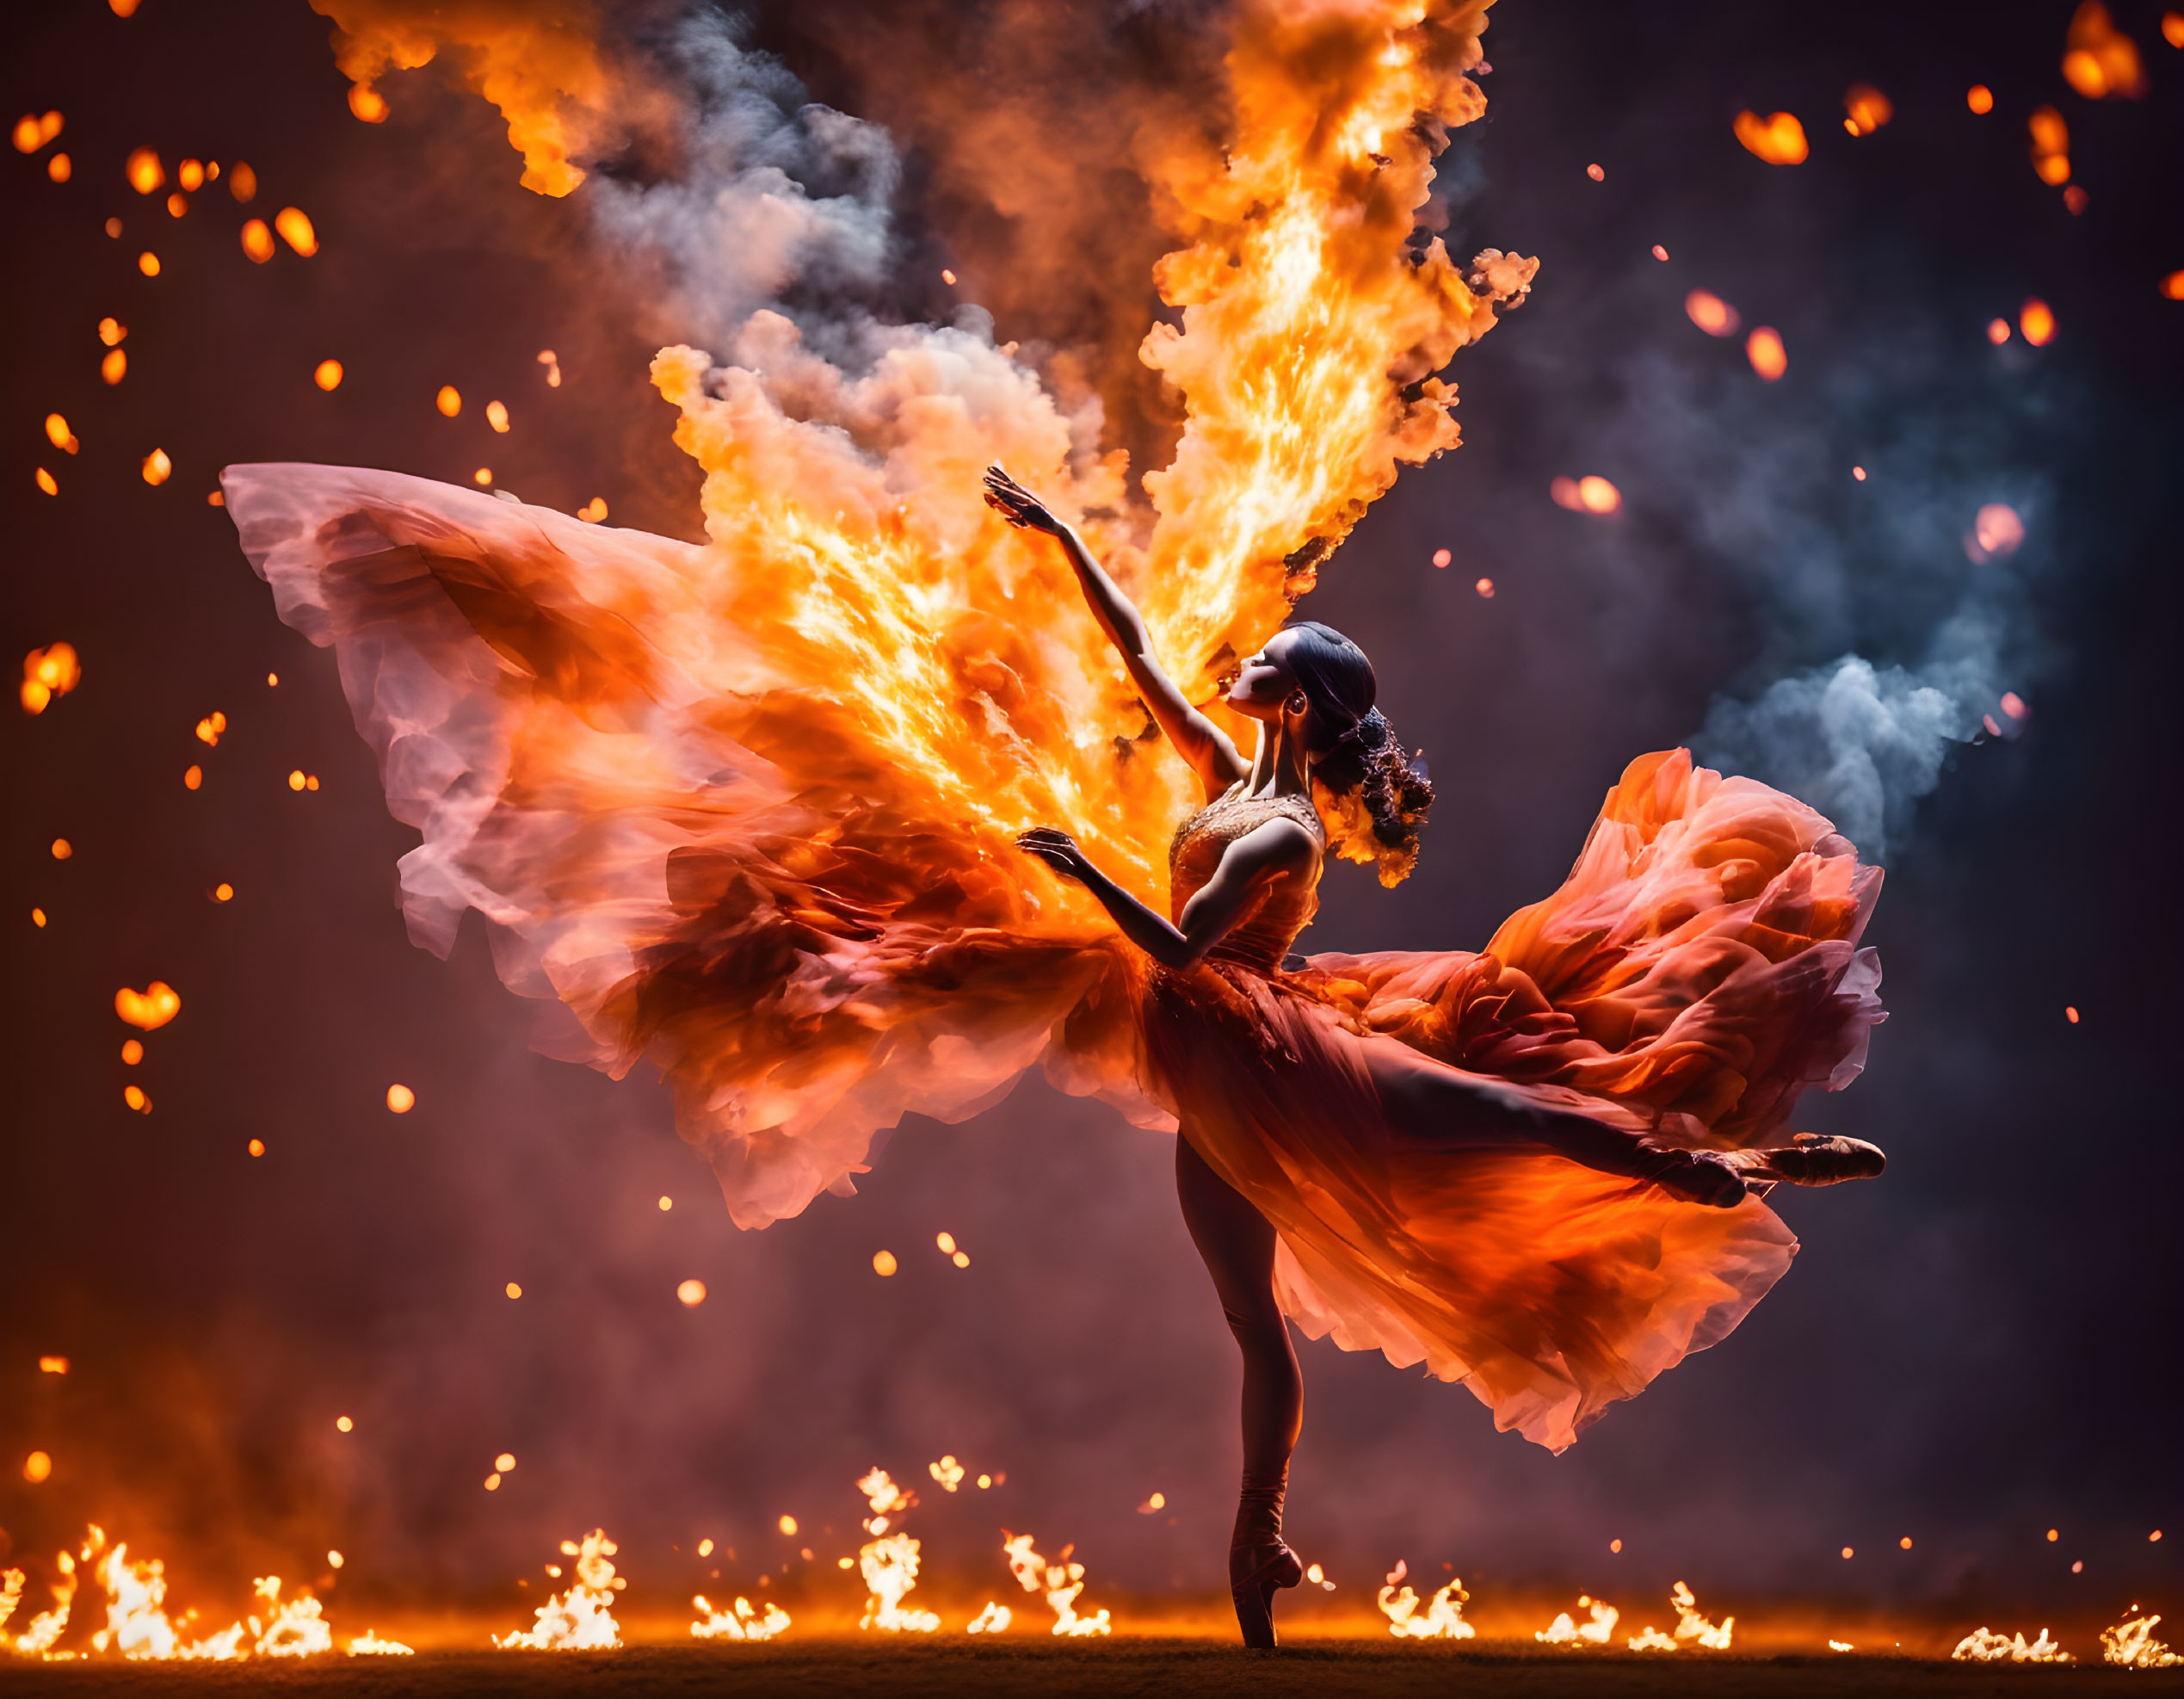 Dance on fire | Deep Dream Generator